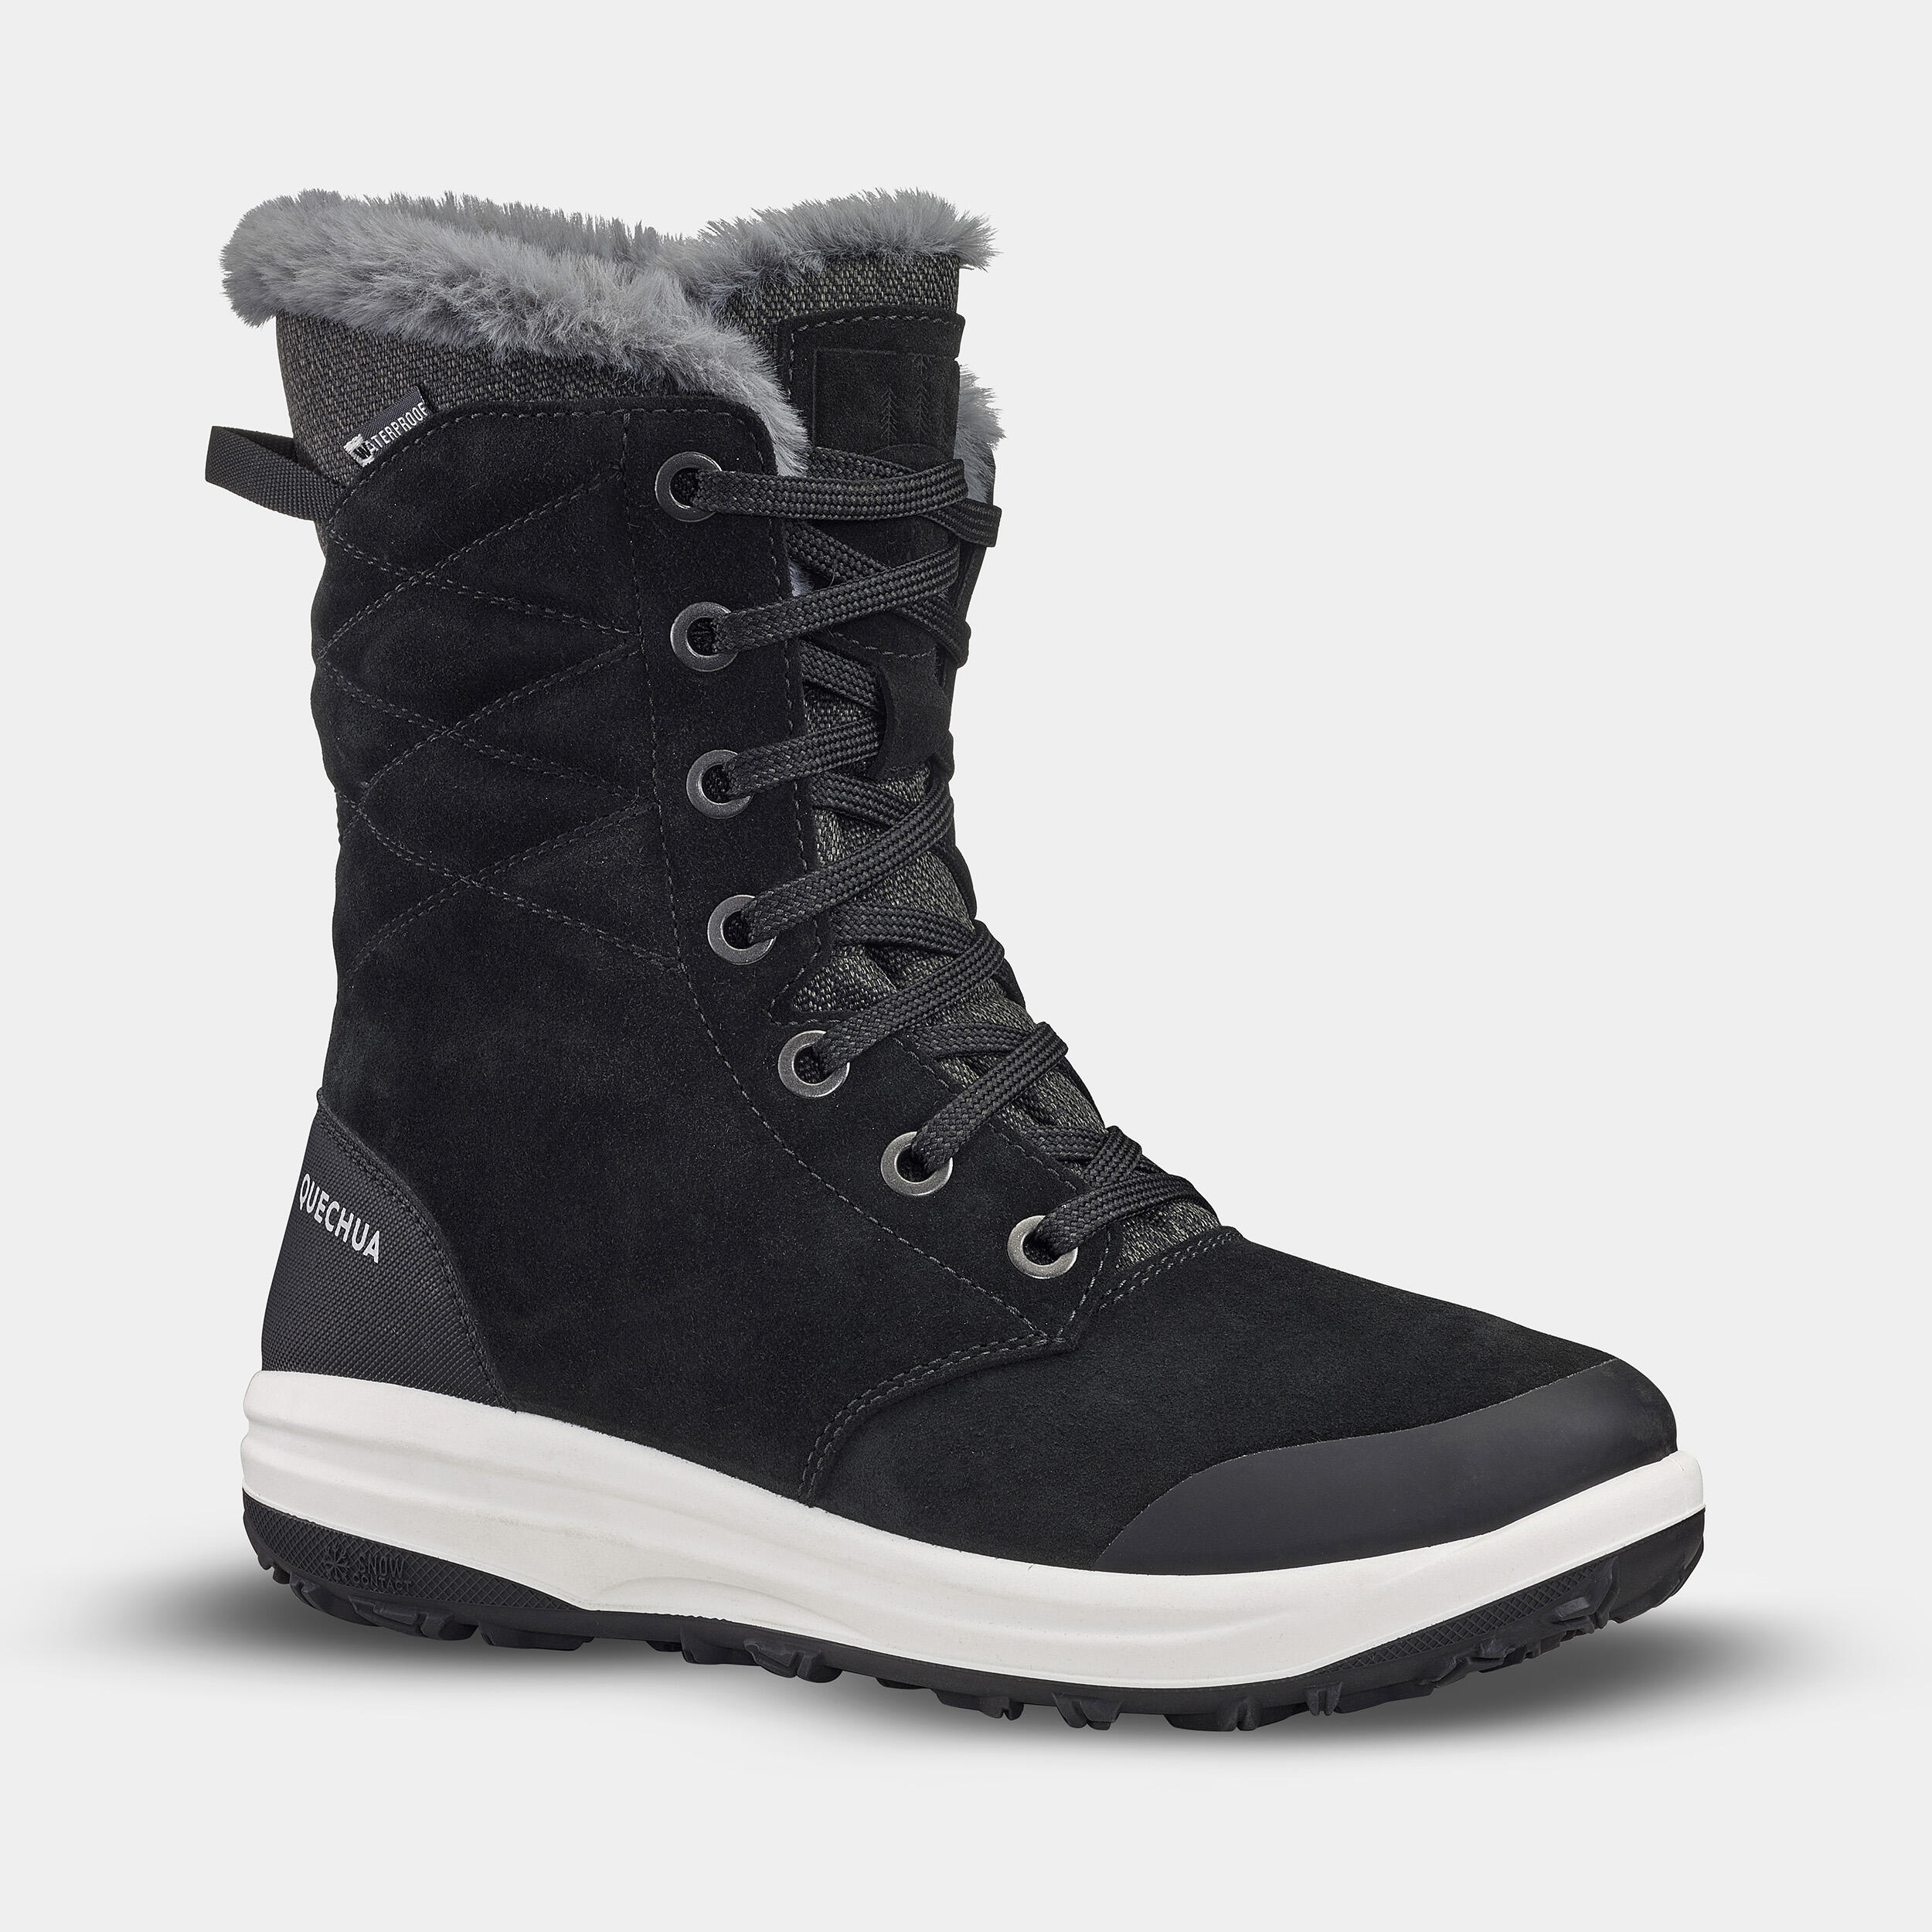 WOMEN FASHION Footwear Waterproof Boots Black 39                  EU Gioseppo Black water boots combined discount 79% 